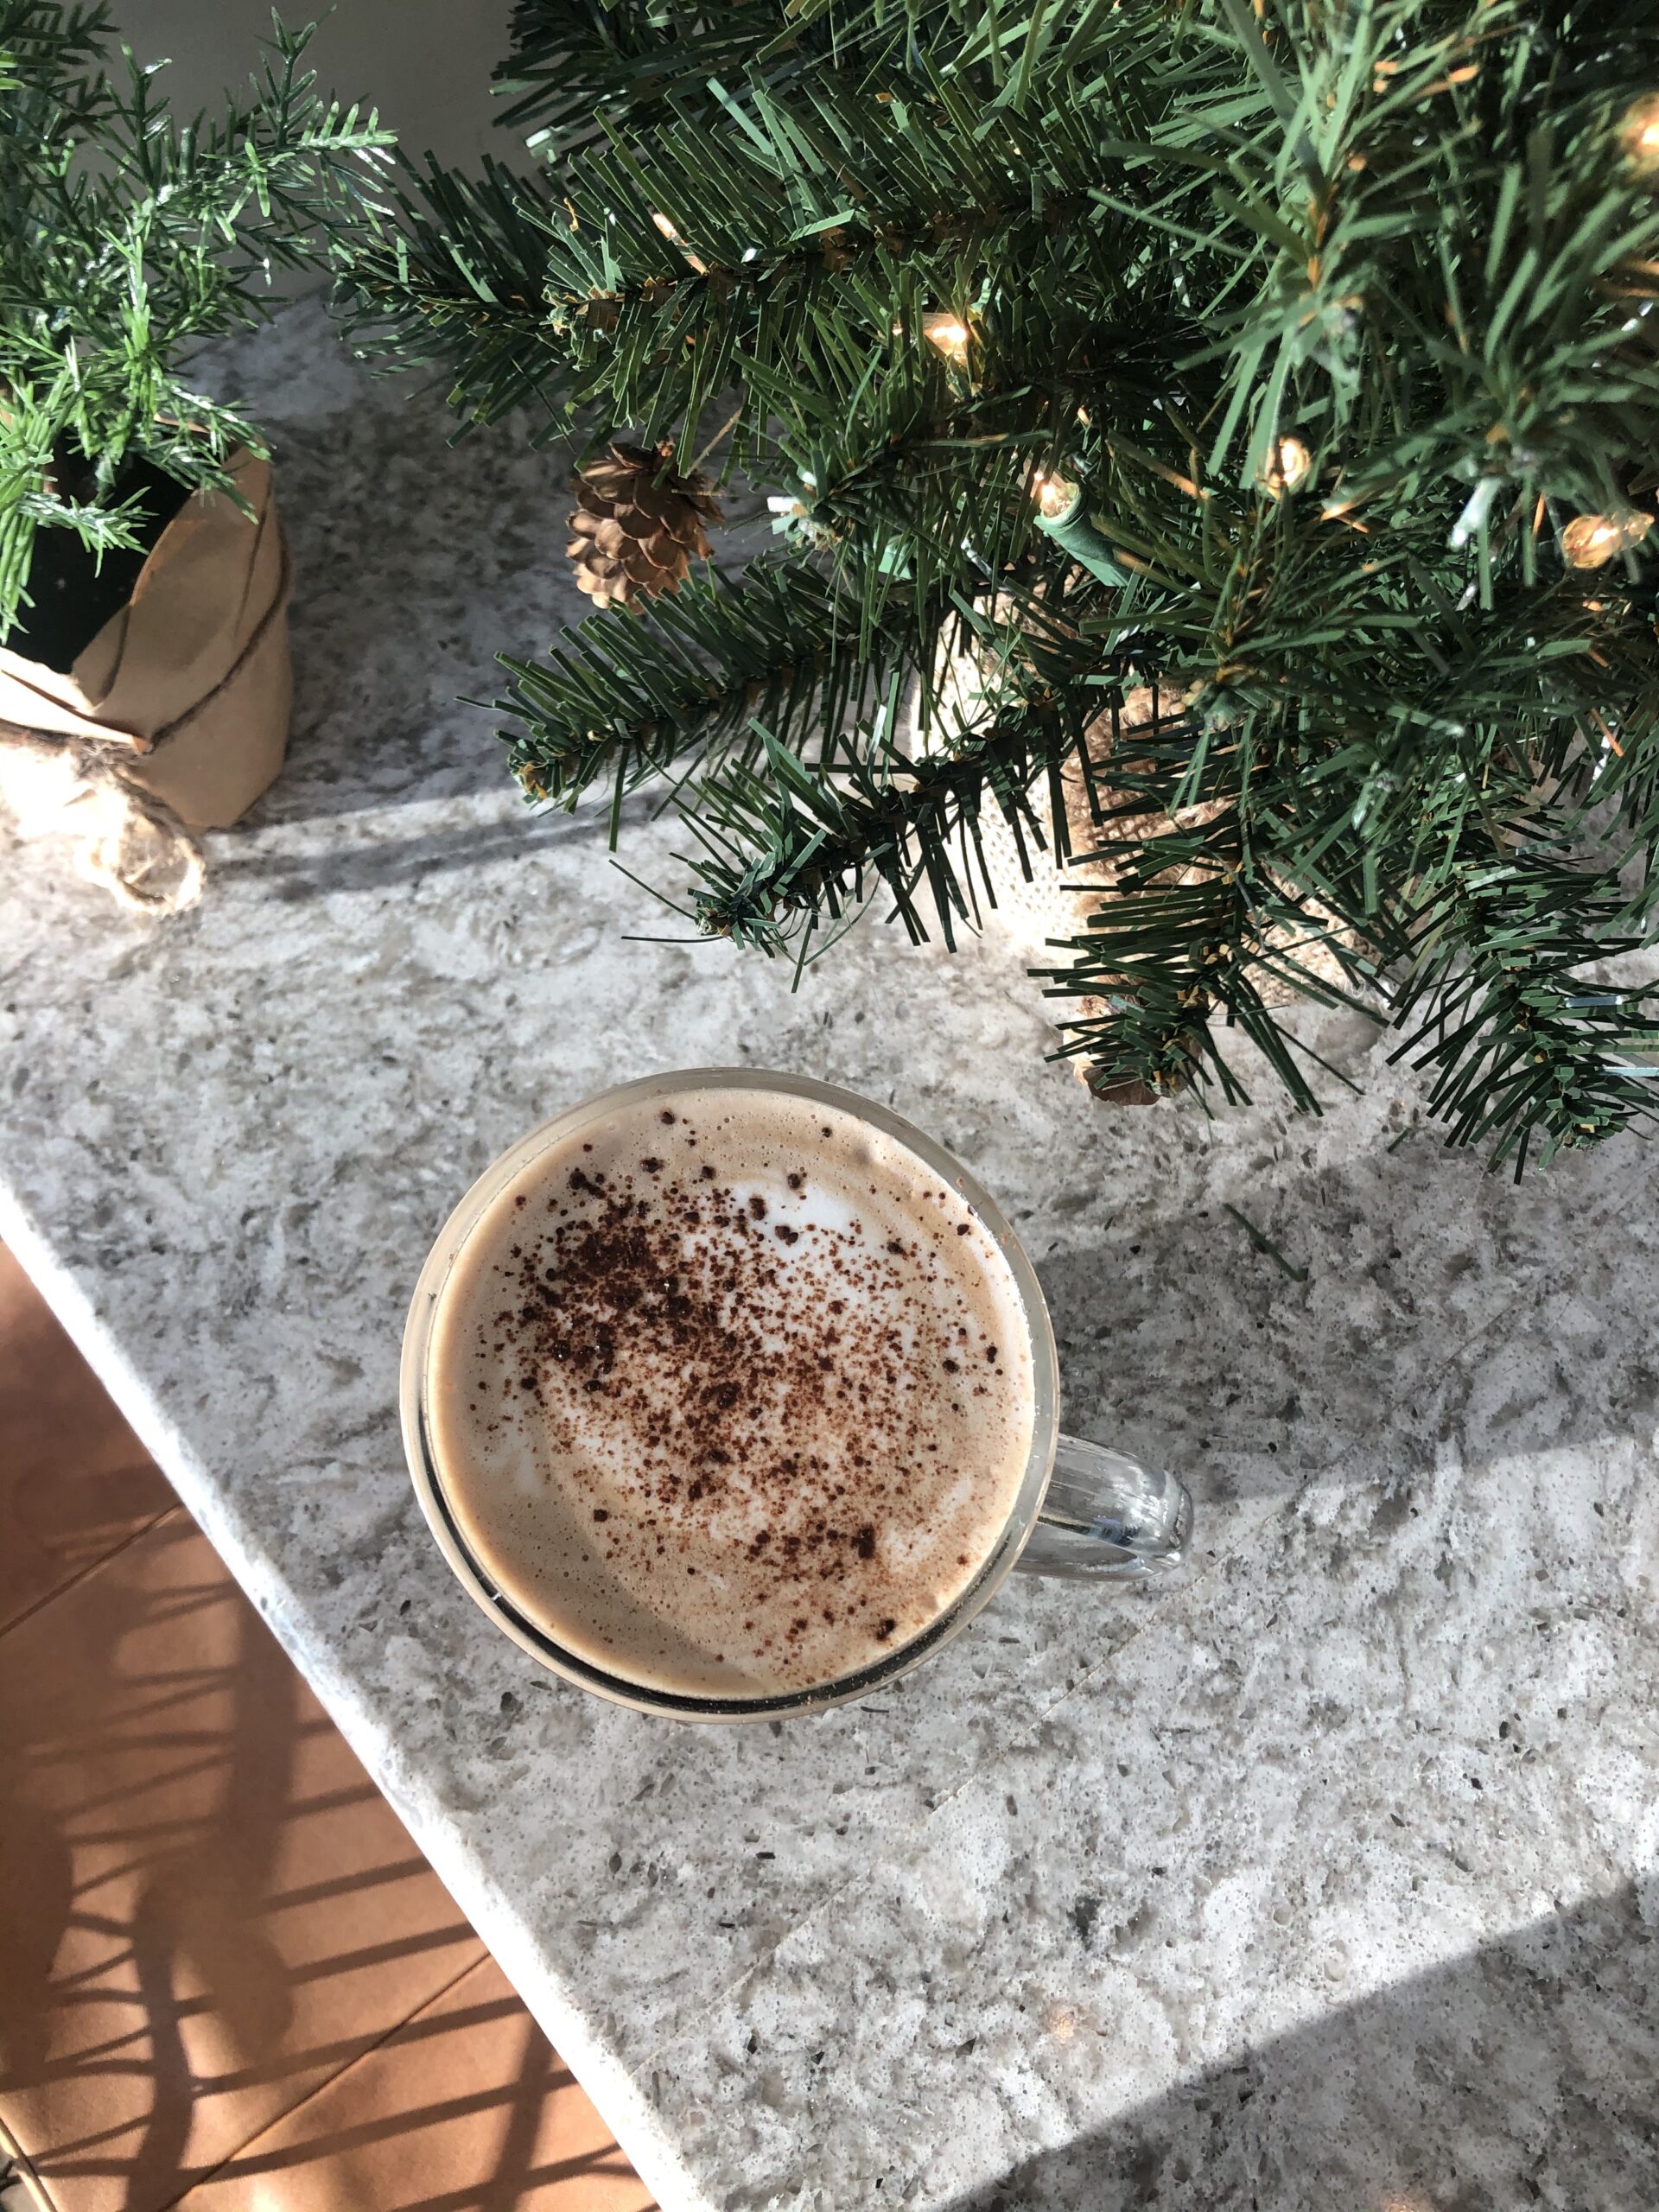 Christmas & Coffee: Top 5 Penny’s winter drinks